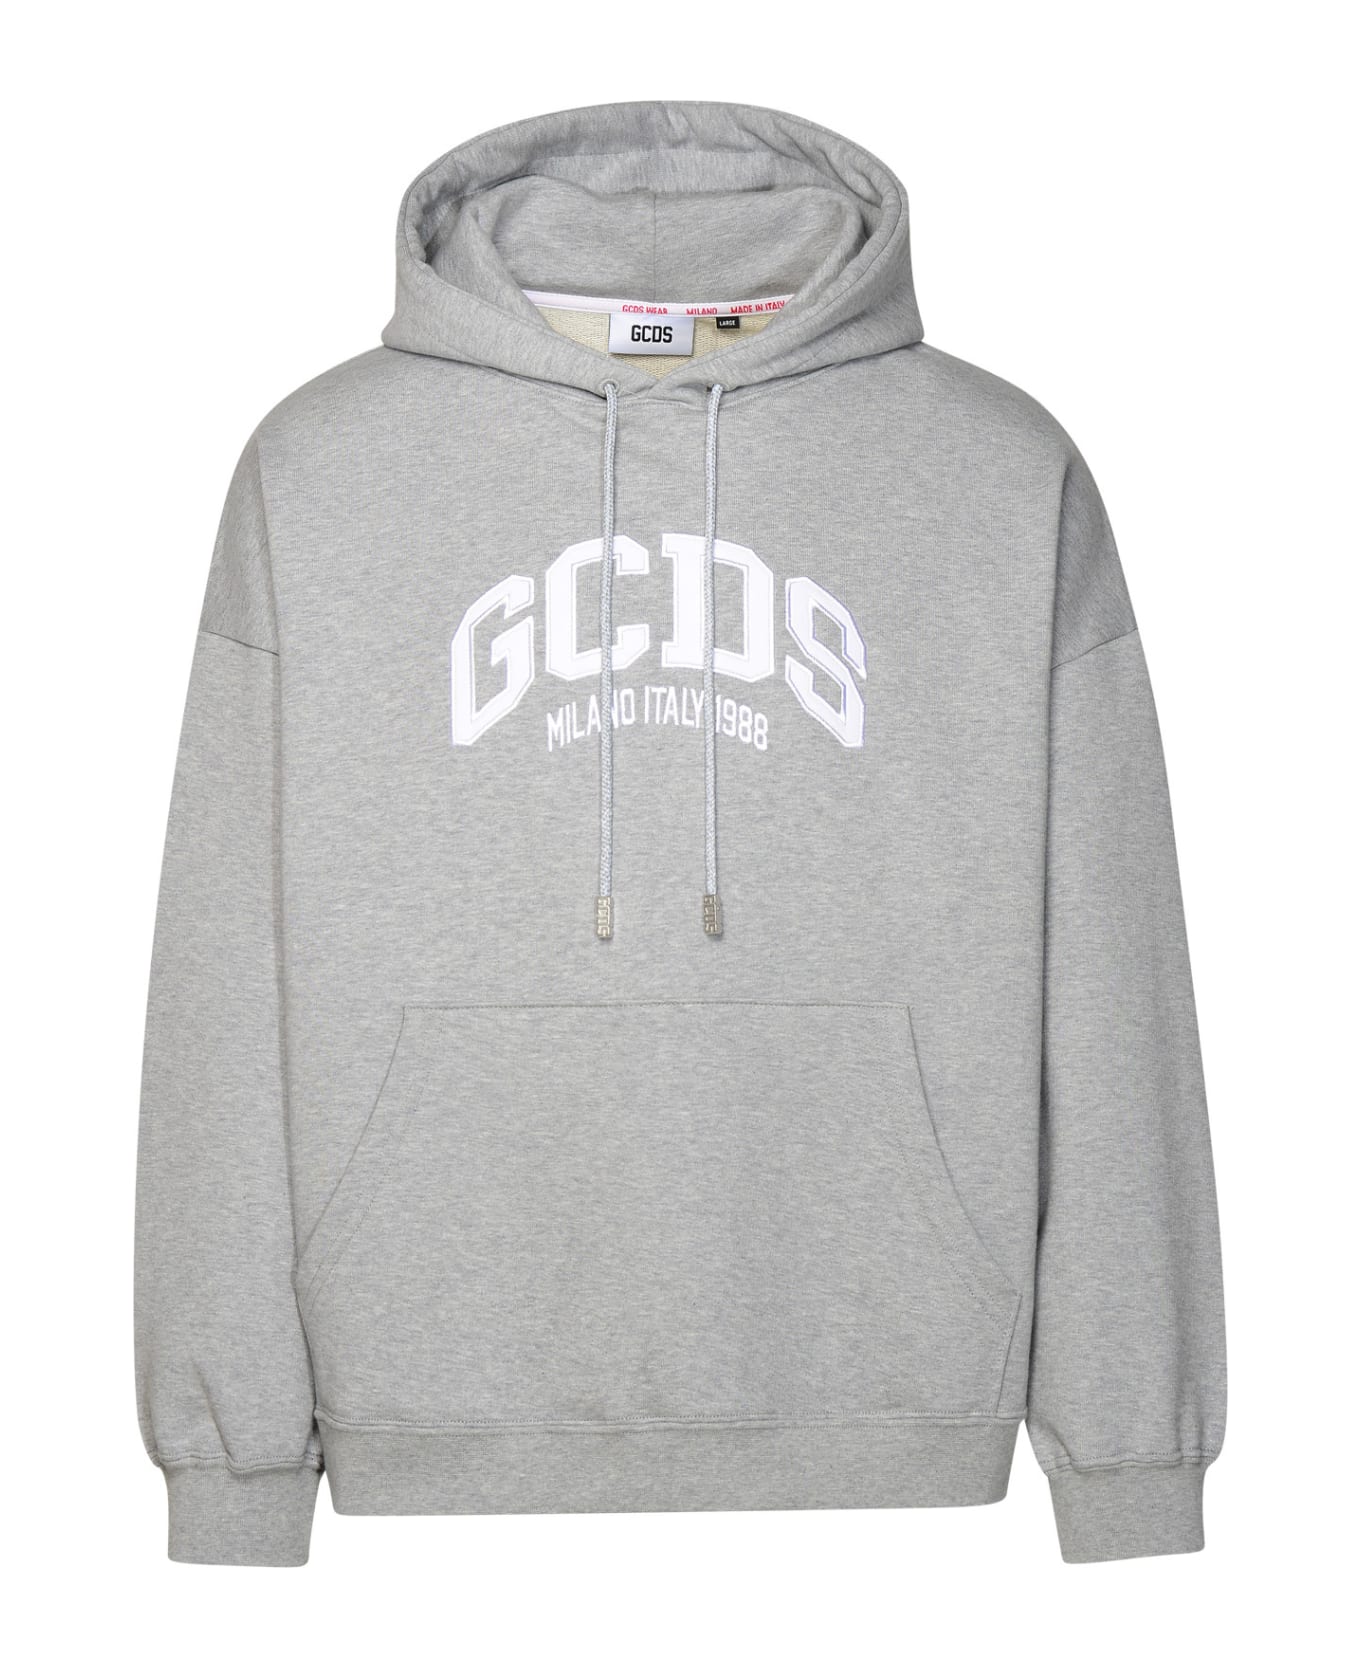 GCDS Gray Cotton Sweatshirt - Grigio